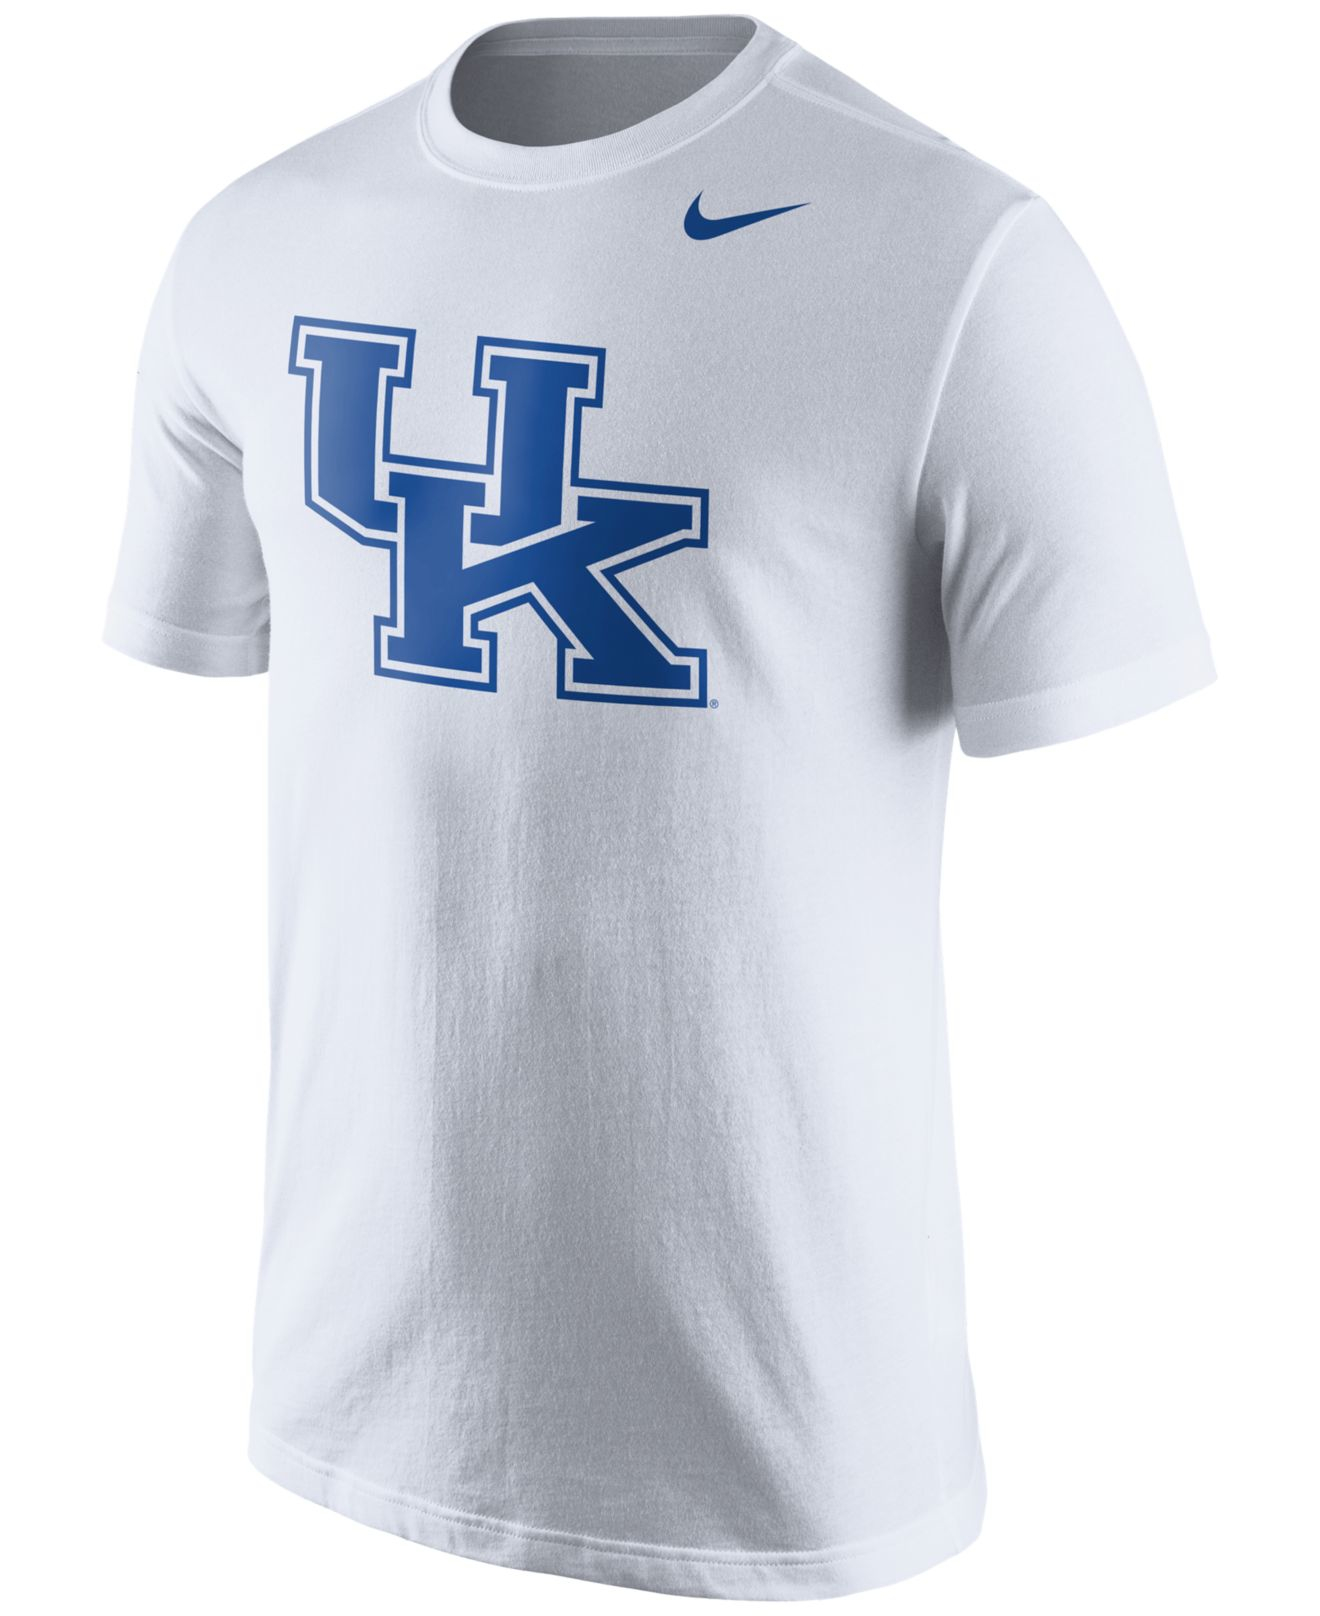 Lyst - Nike Men's Kentucky Wildcats Logo T-shirt in White for Men